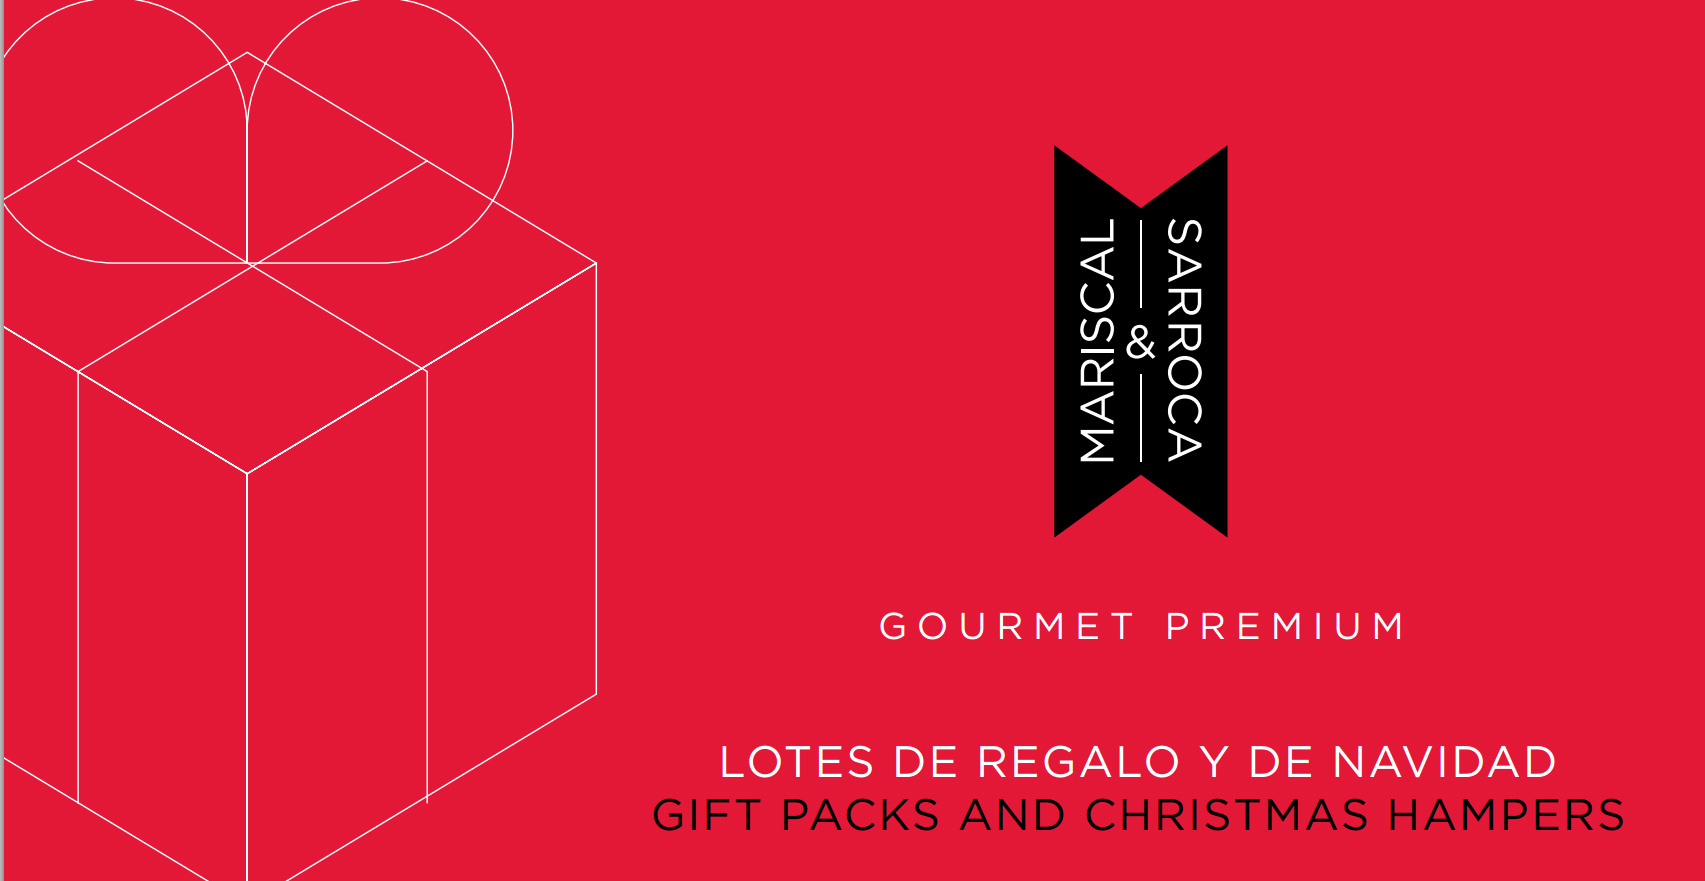 gifts-packs-christmas-hampers-mariscal-sarroca-gourmet-food-spain